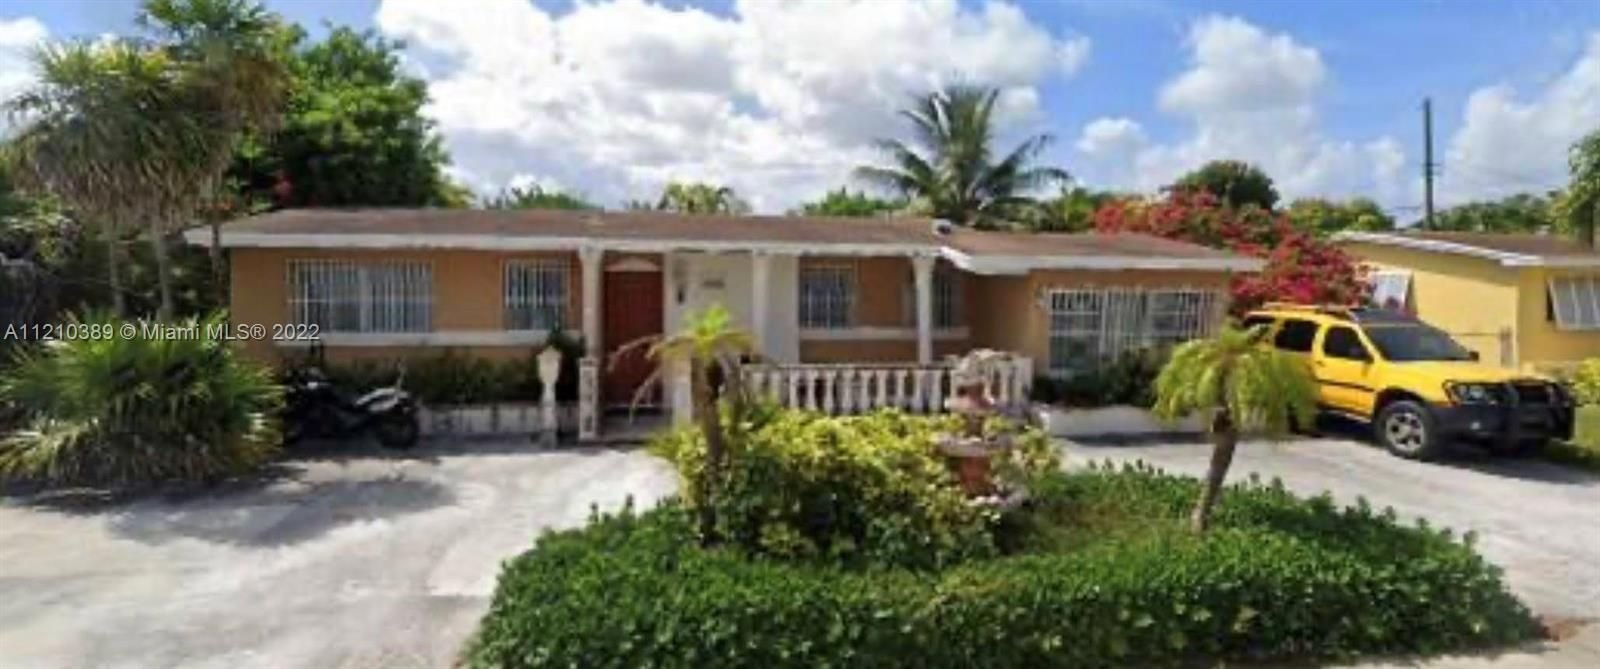 Real estate property located at 1800 87th Ave, Miami-Dade County, Miami, FL